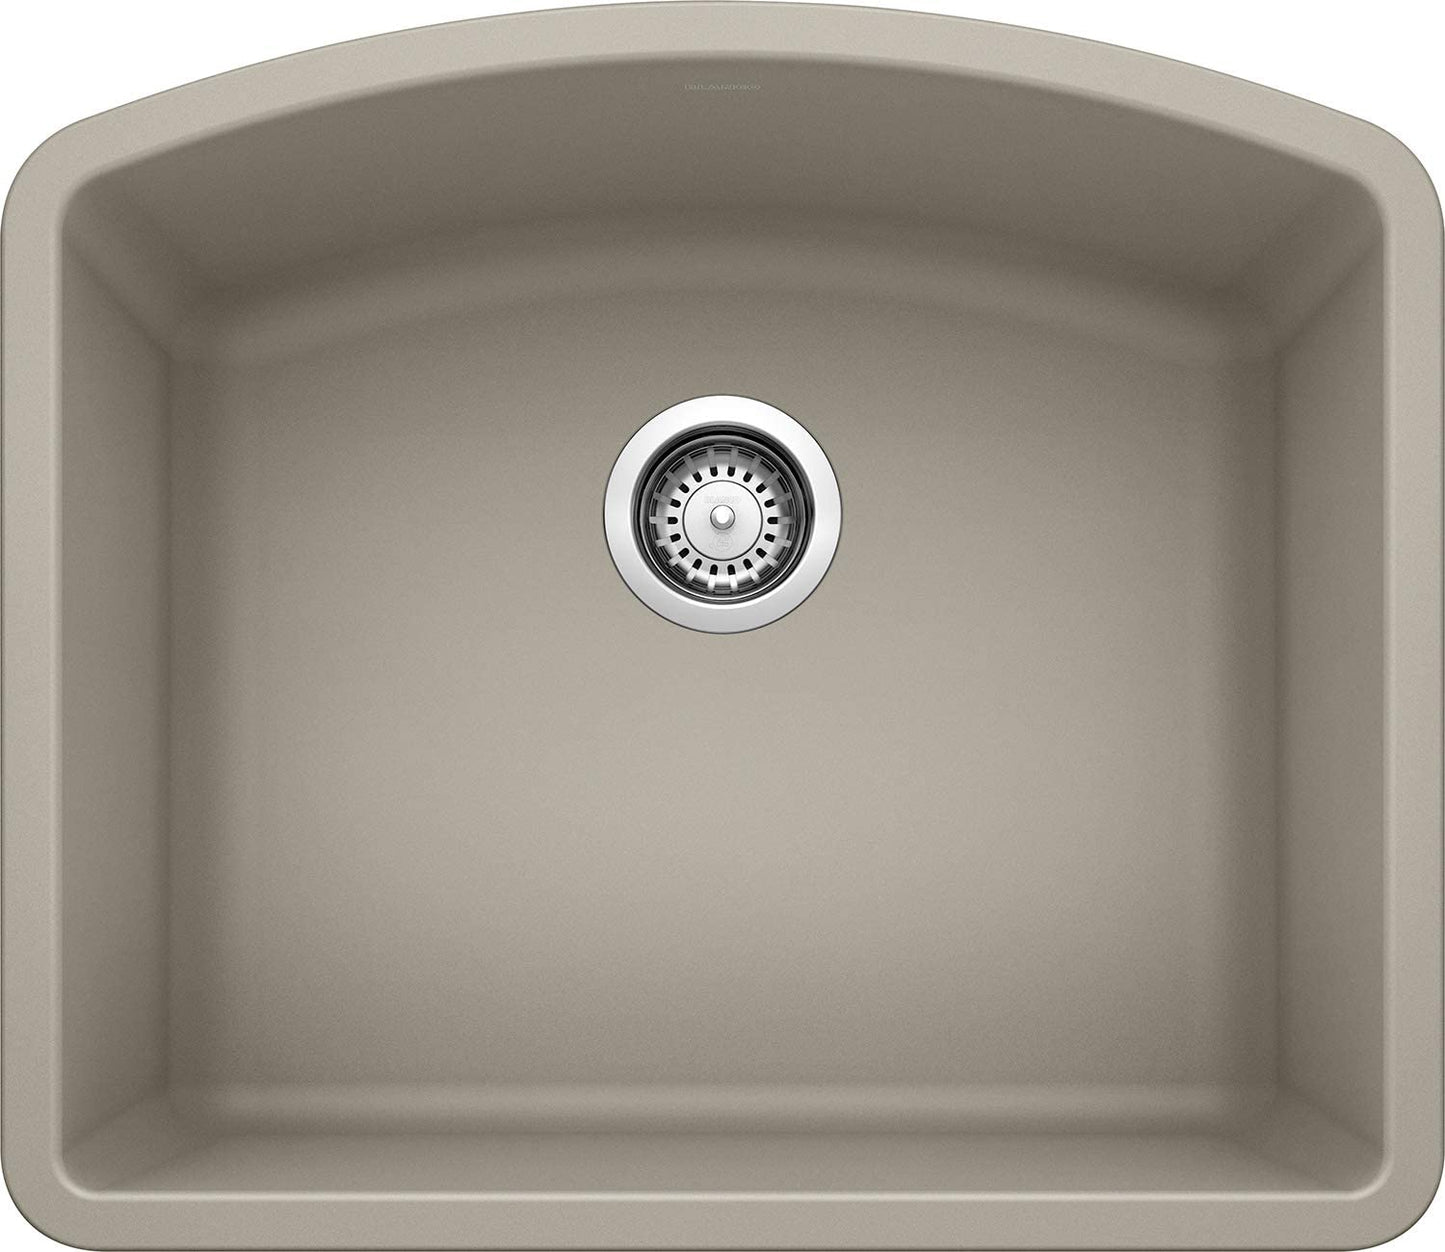 24"Diamond Single Bowl kitchen Sink - Truffle